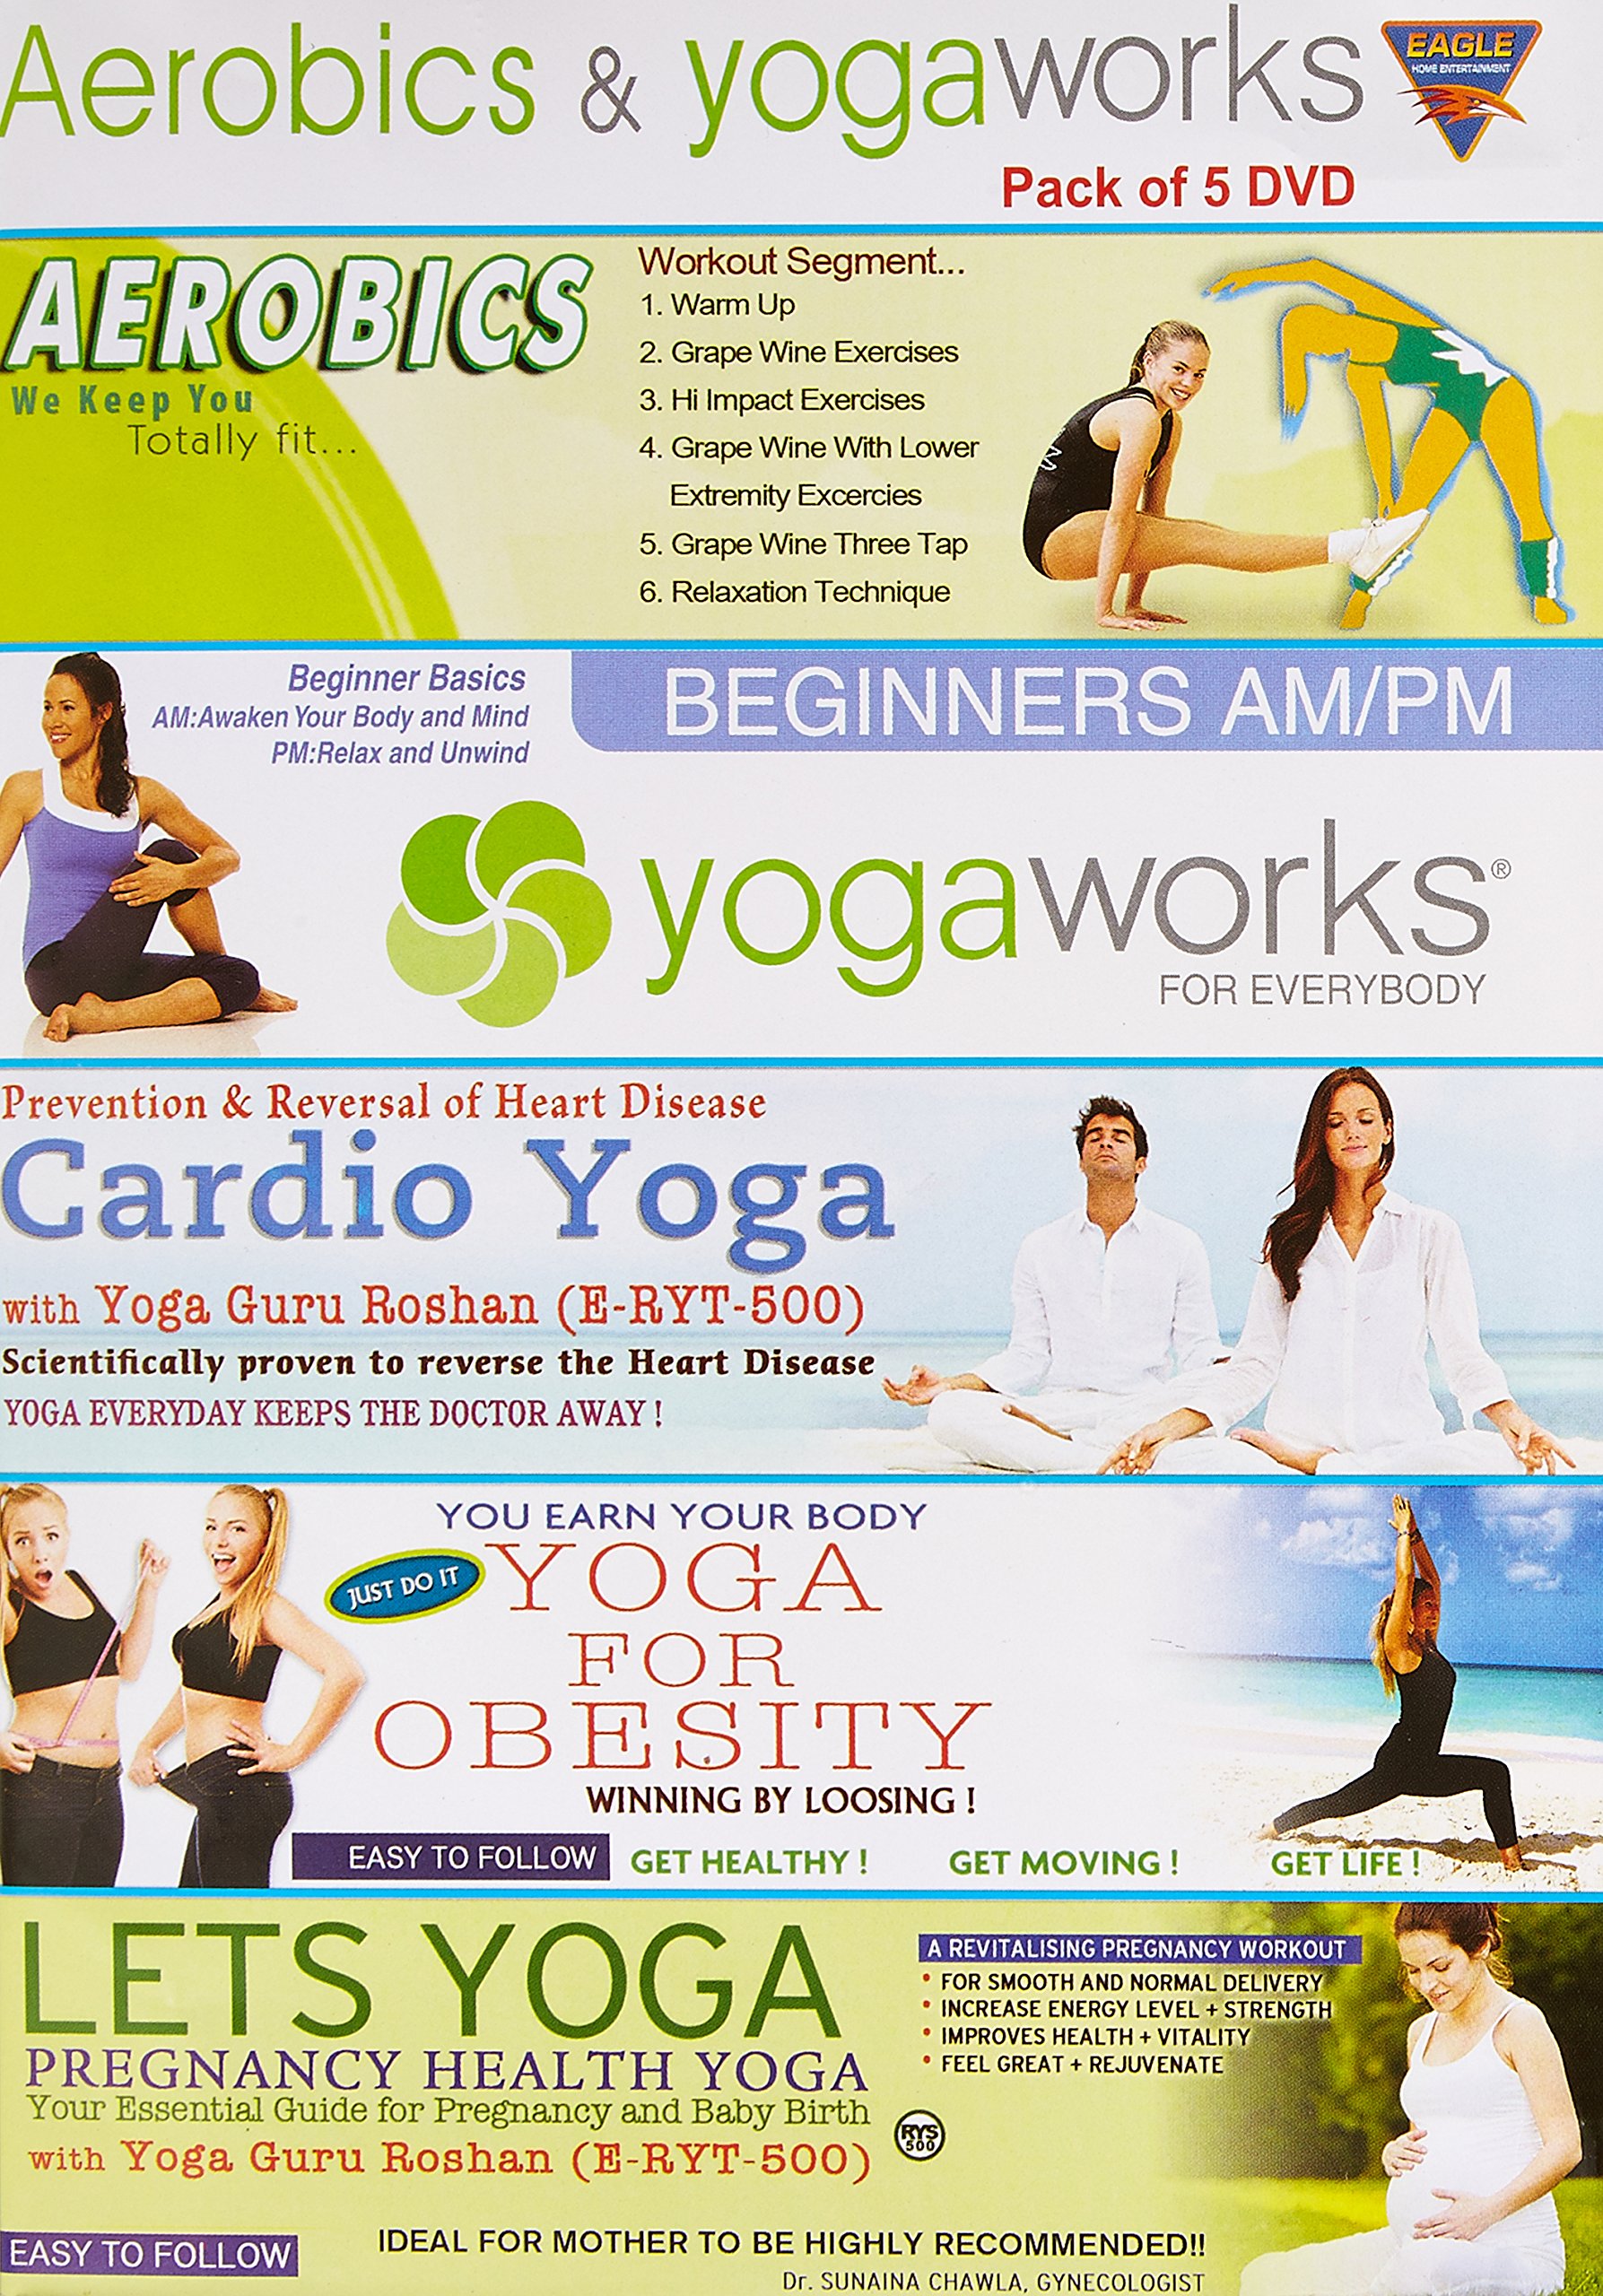 aerobics-yoga-works-pack-of-5-dvds-aerobics-beginners-am-pm-cardio-yoga-yoga-for-obesity-lets-yoga-pregnancy-health-yoga